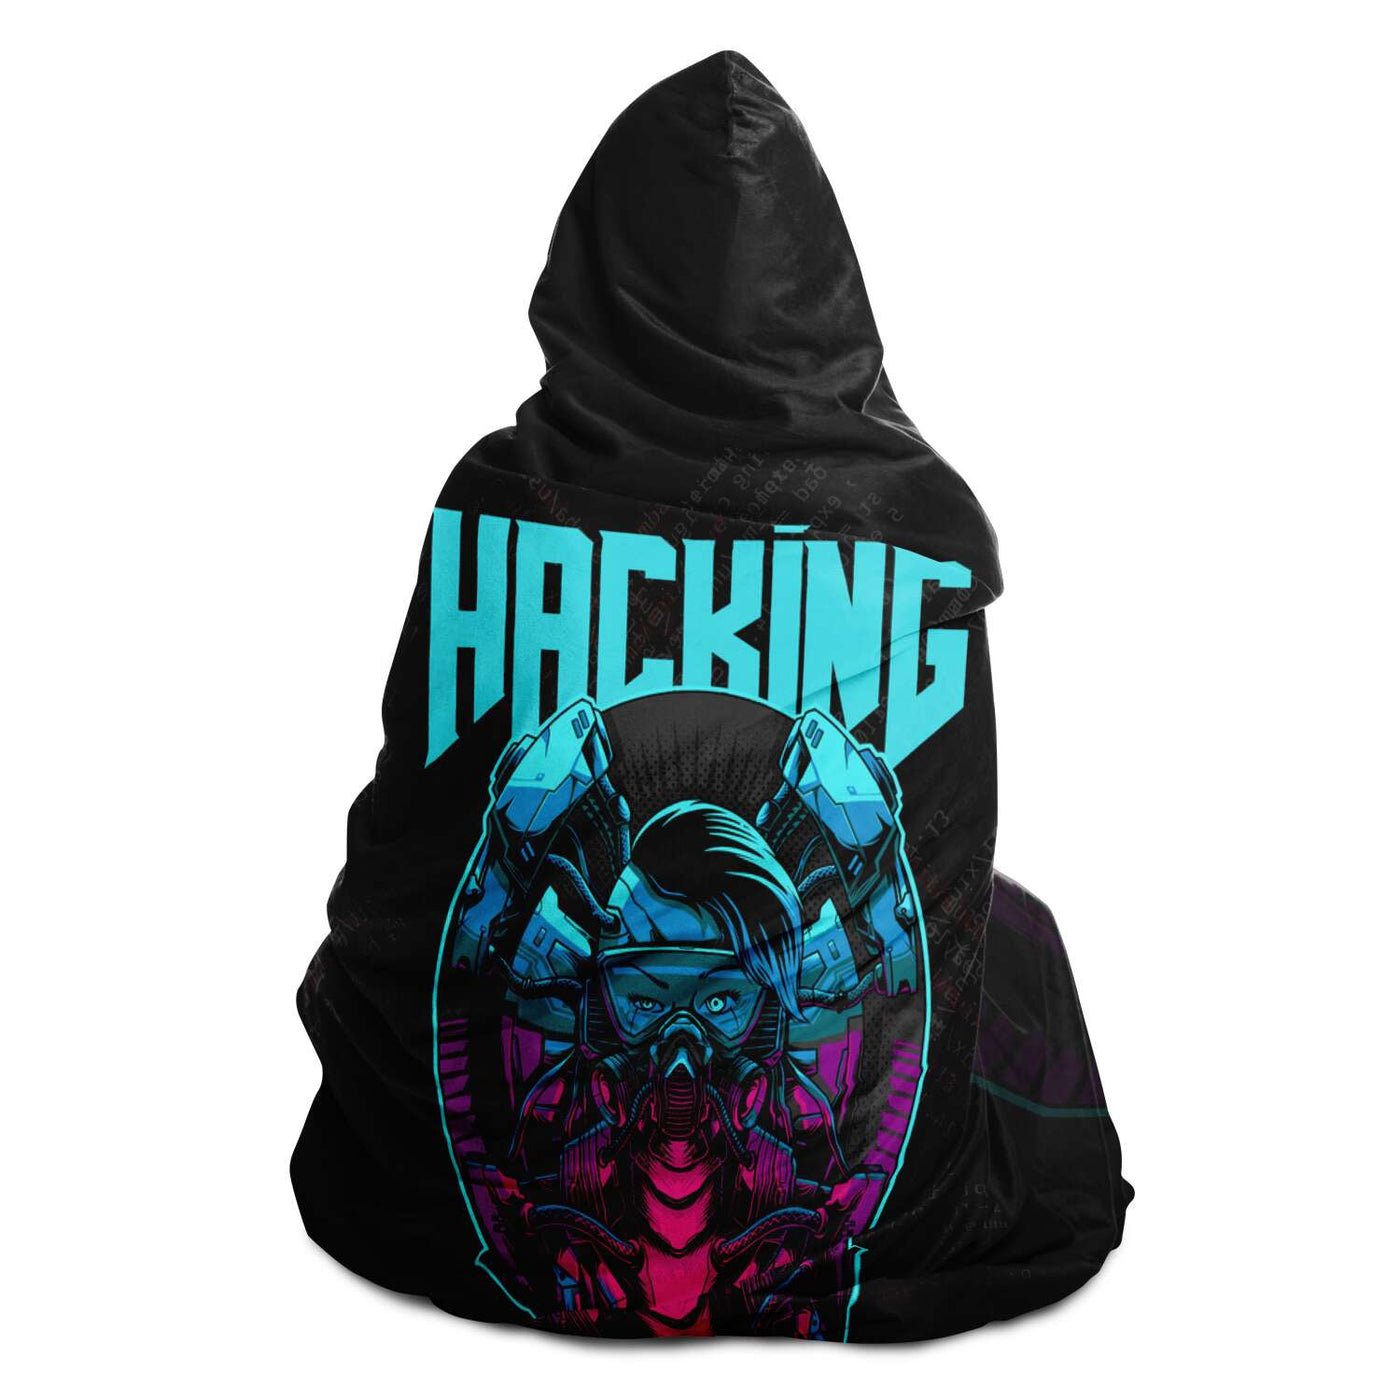 Hacking the apocalypse v2 - Hooded Blanket